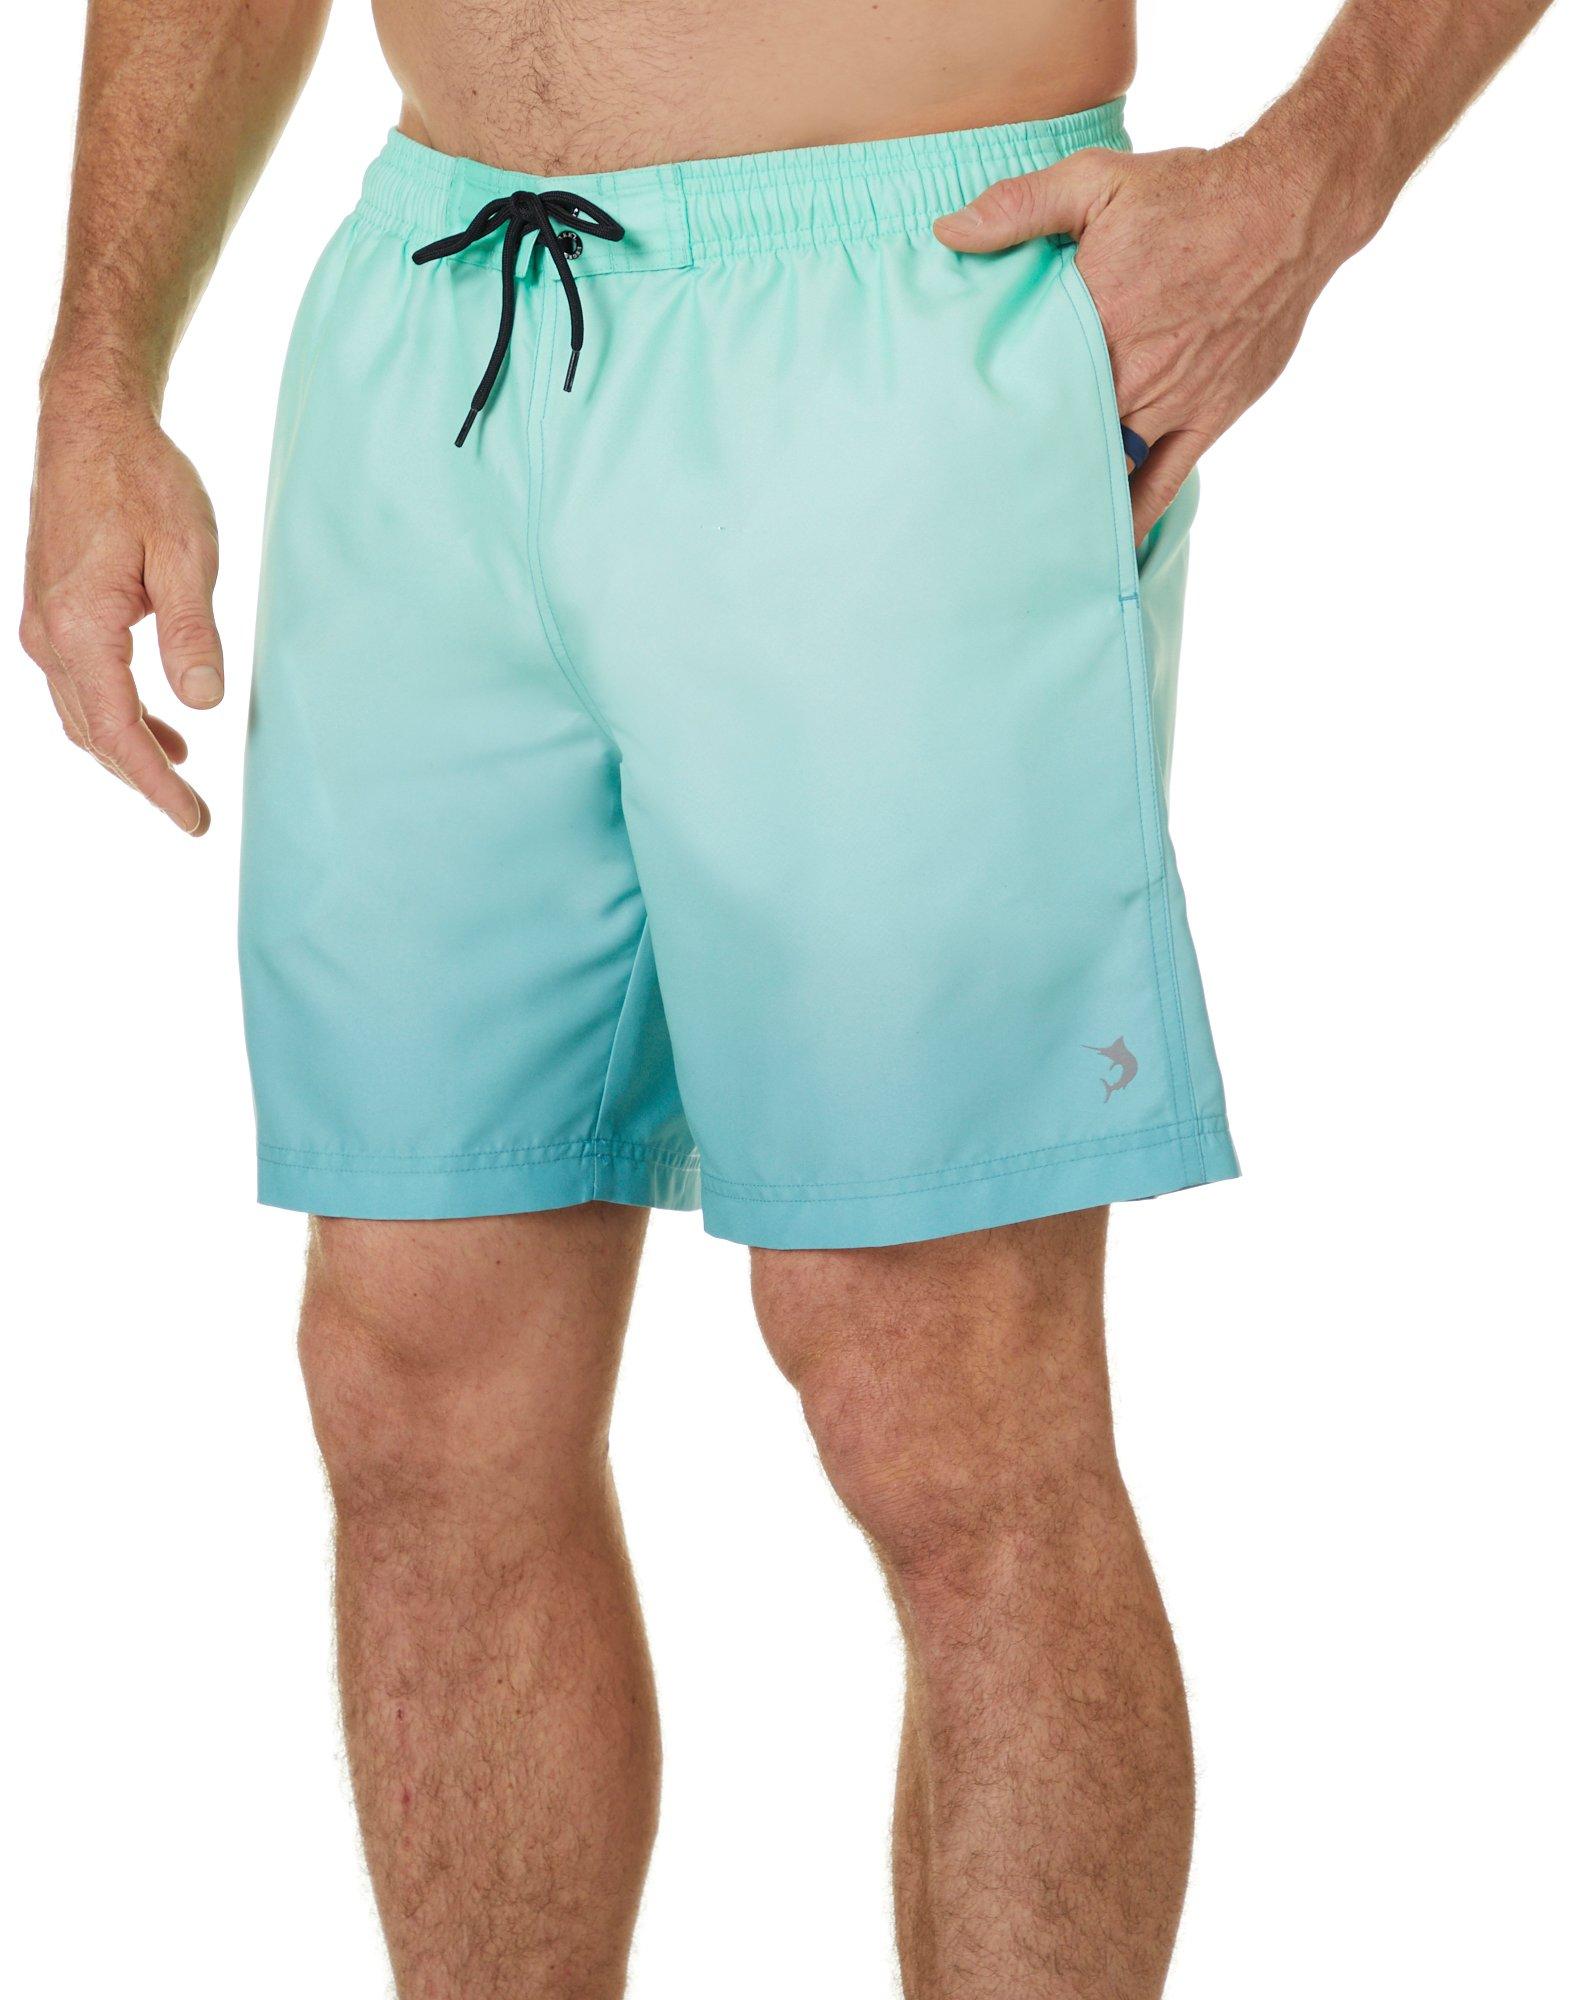 MOOKO Mens Summer Swim Trunks Quick Dry Beach Board Swim Shorts Elastic Waist Swimsuit Swimwear Bathing Suit with Pockets